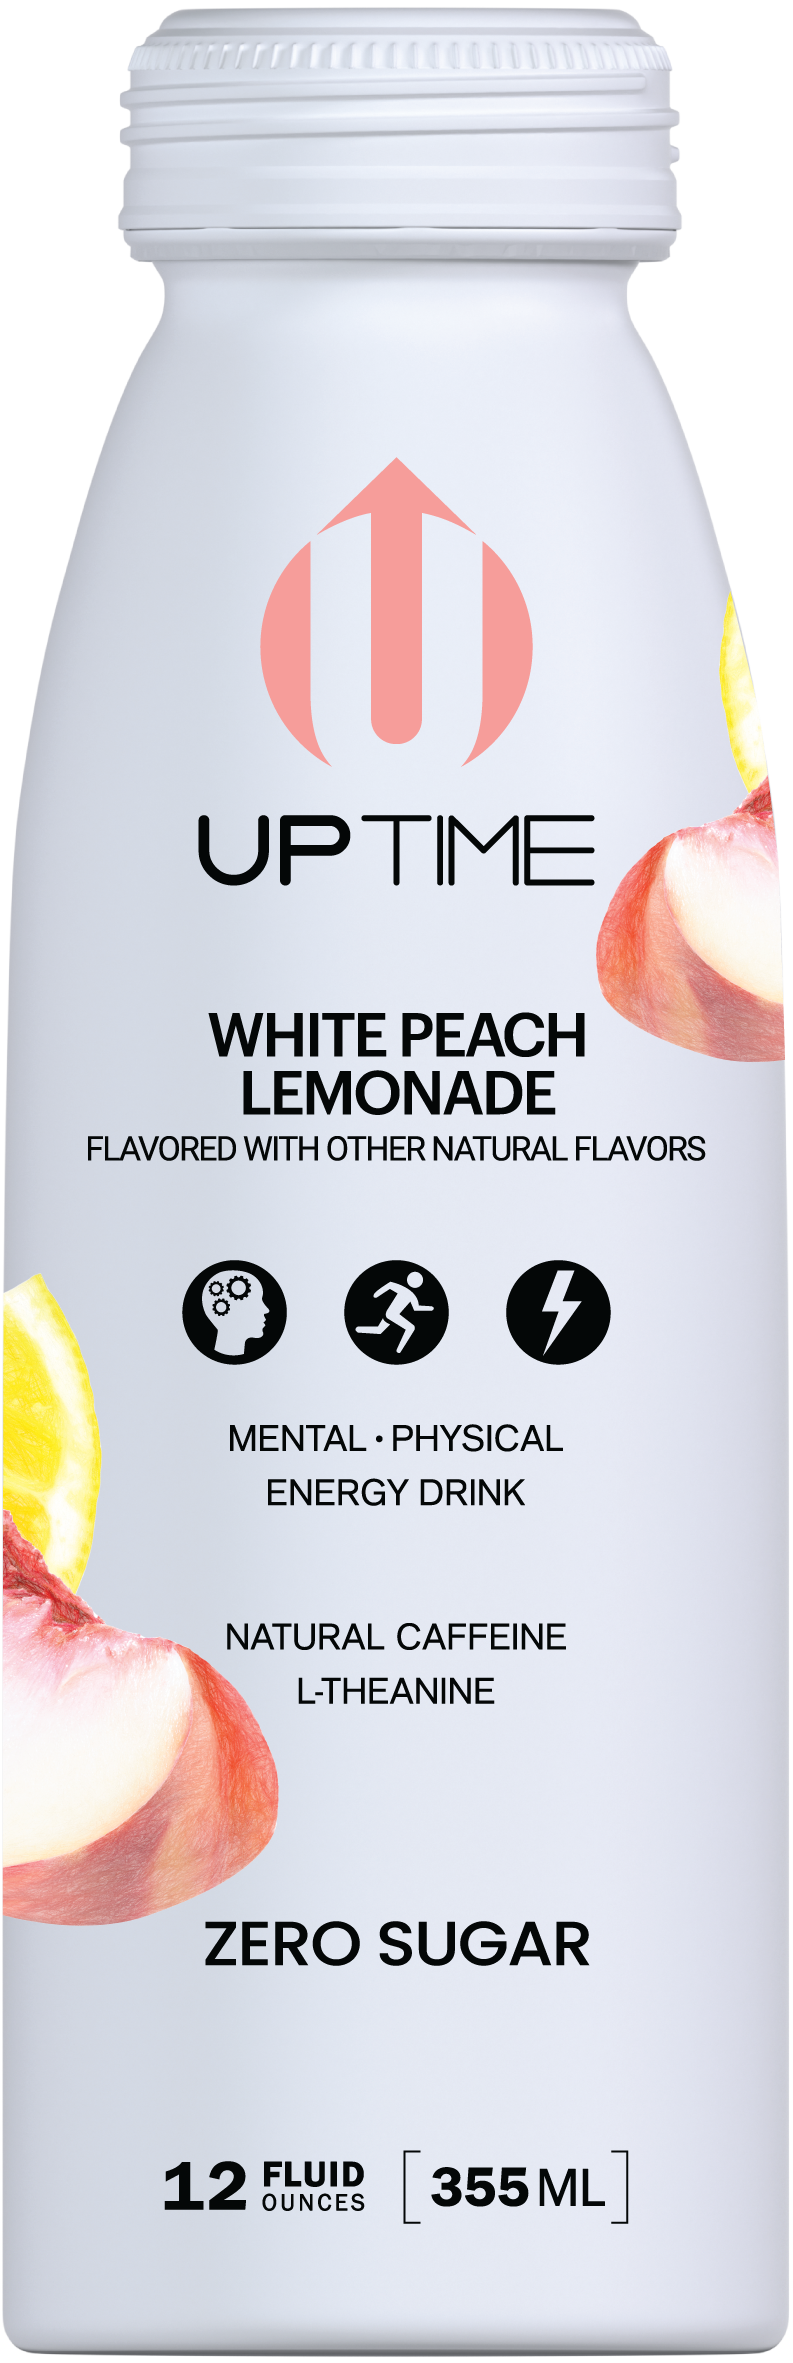 UPTIME Premium Energy Drink, White Peach Lemonade - Sugar Free, 12oz Bottles - Multi Pack